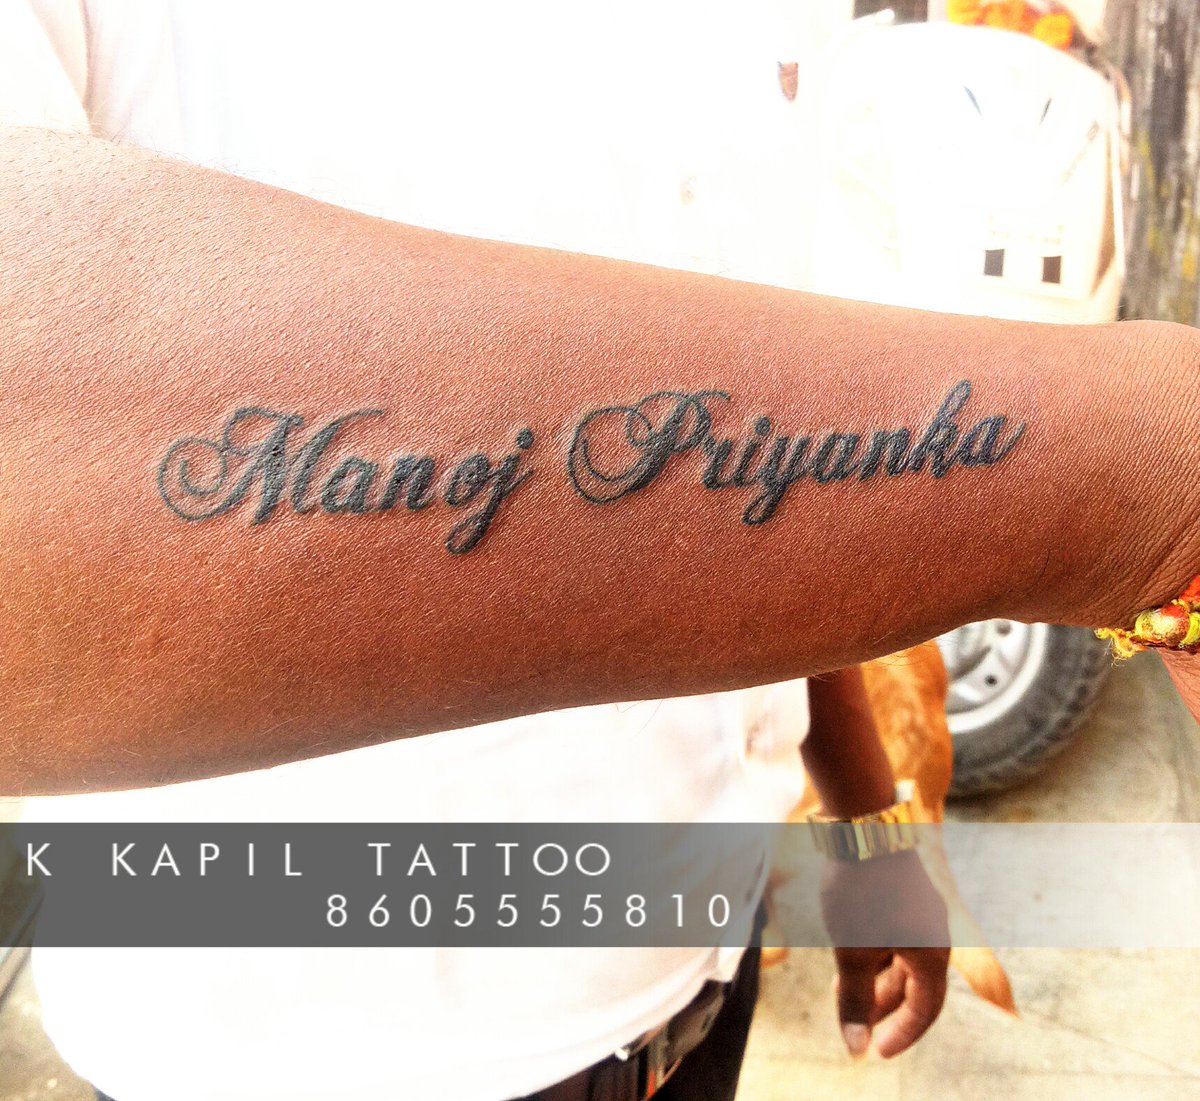 Aggregate 80 about manoj name tattoo designs super hot  indaotaonec